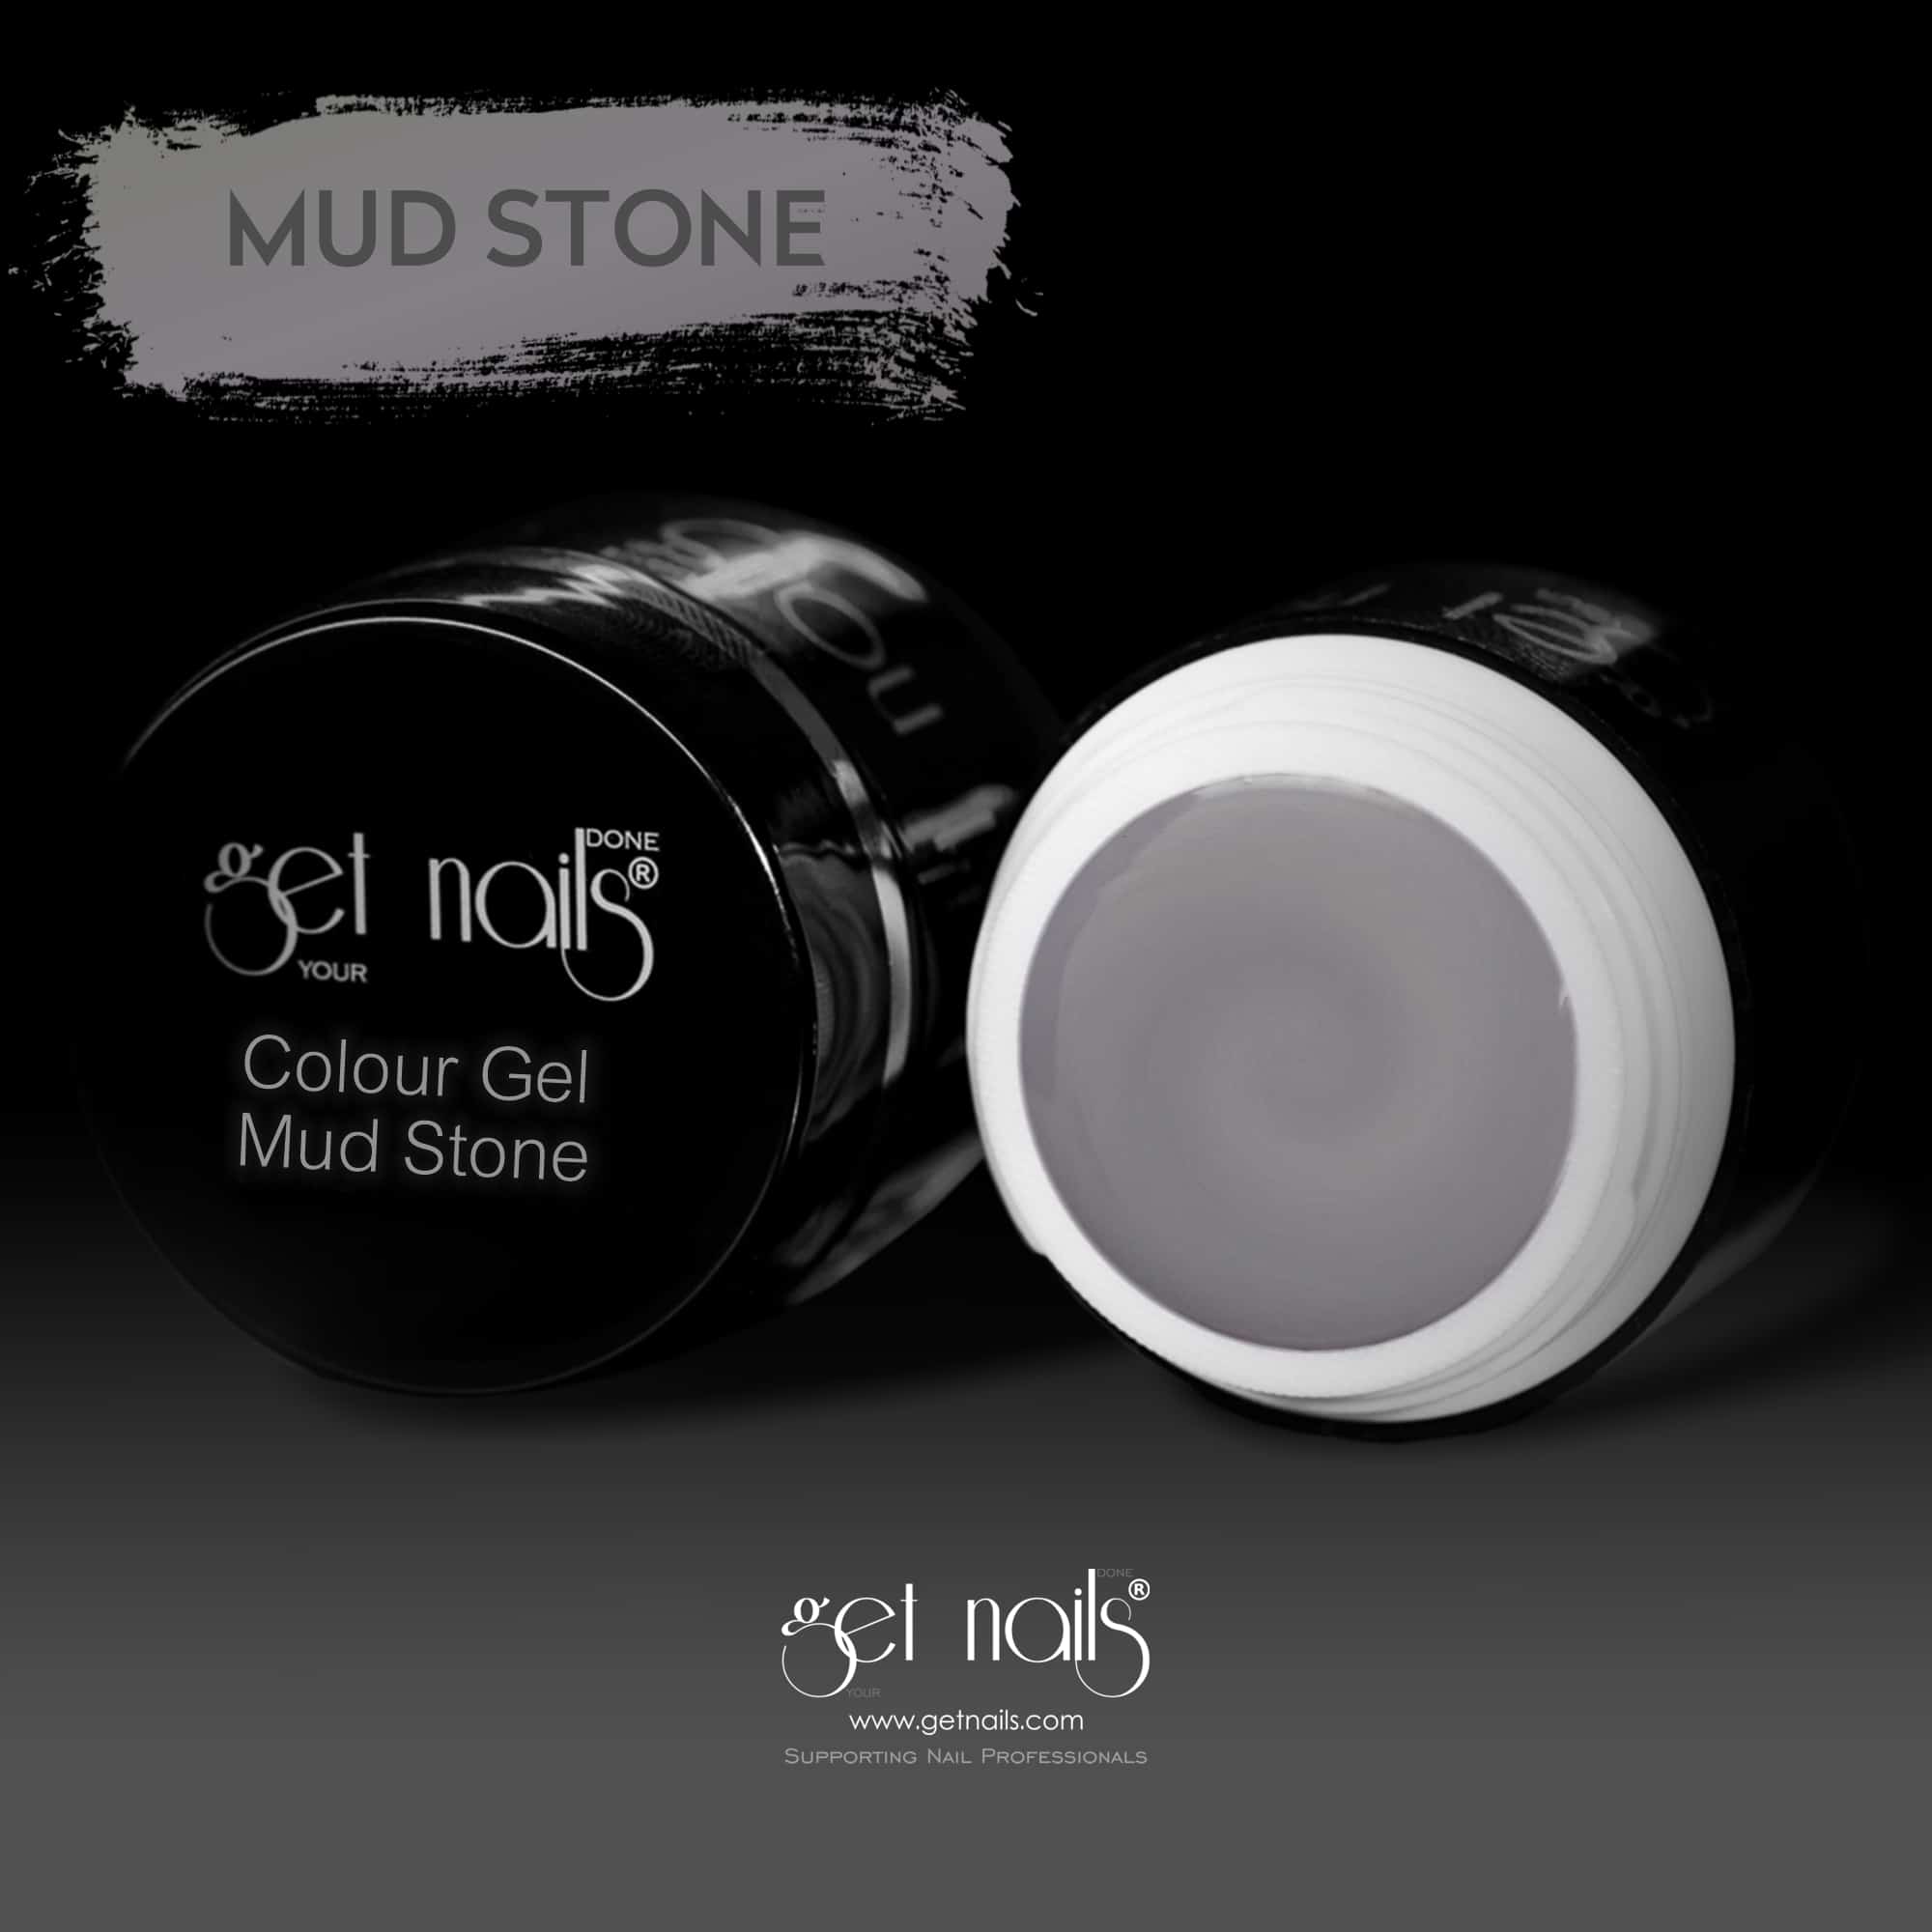 Get Nails Austria - Colour Gel Mud Stone 5g